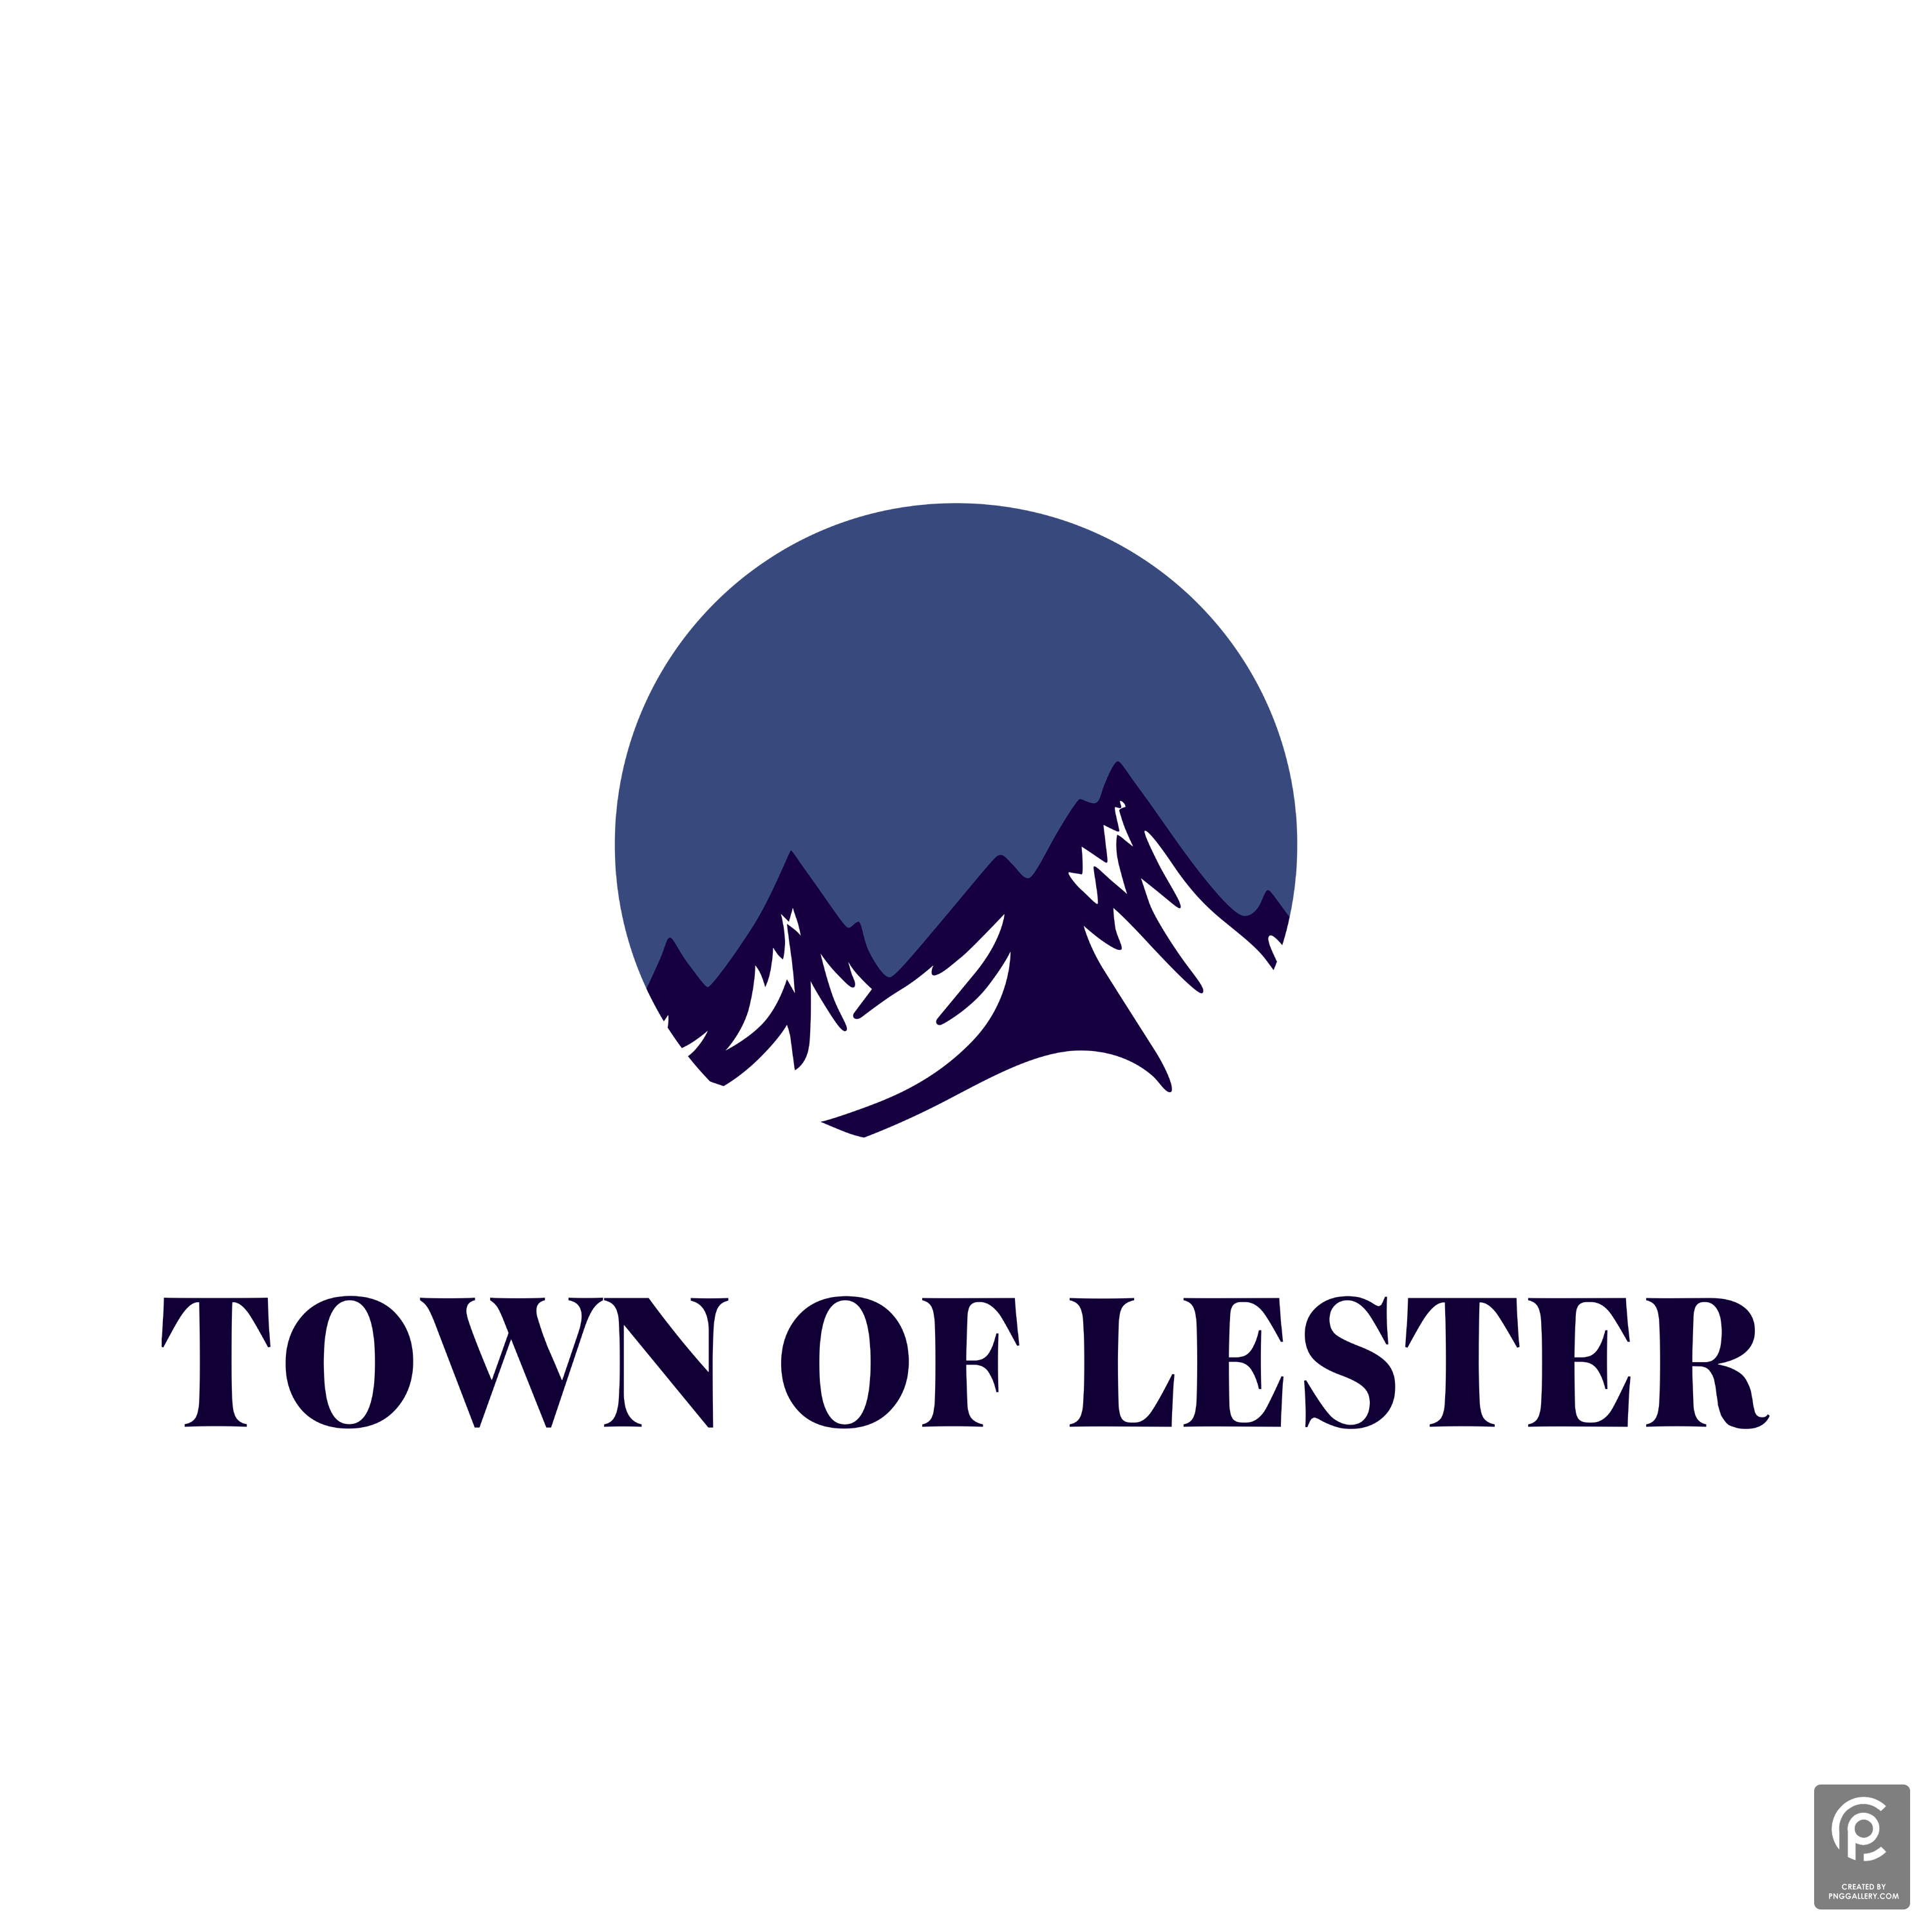 Lester West Virginia Logo Transparent Picture